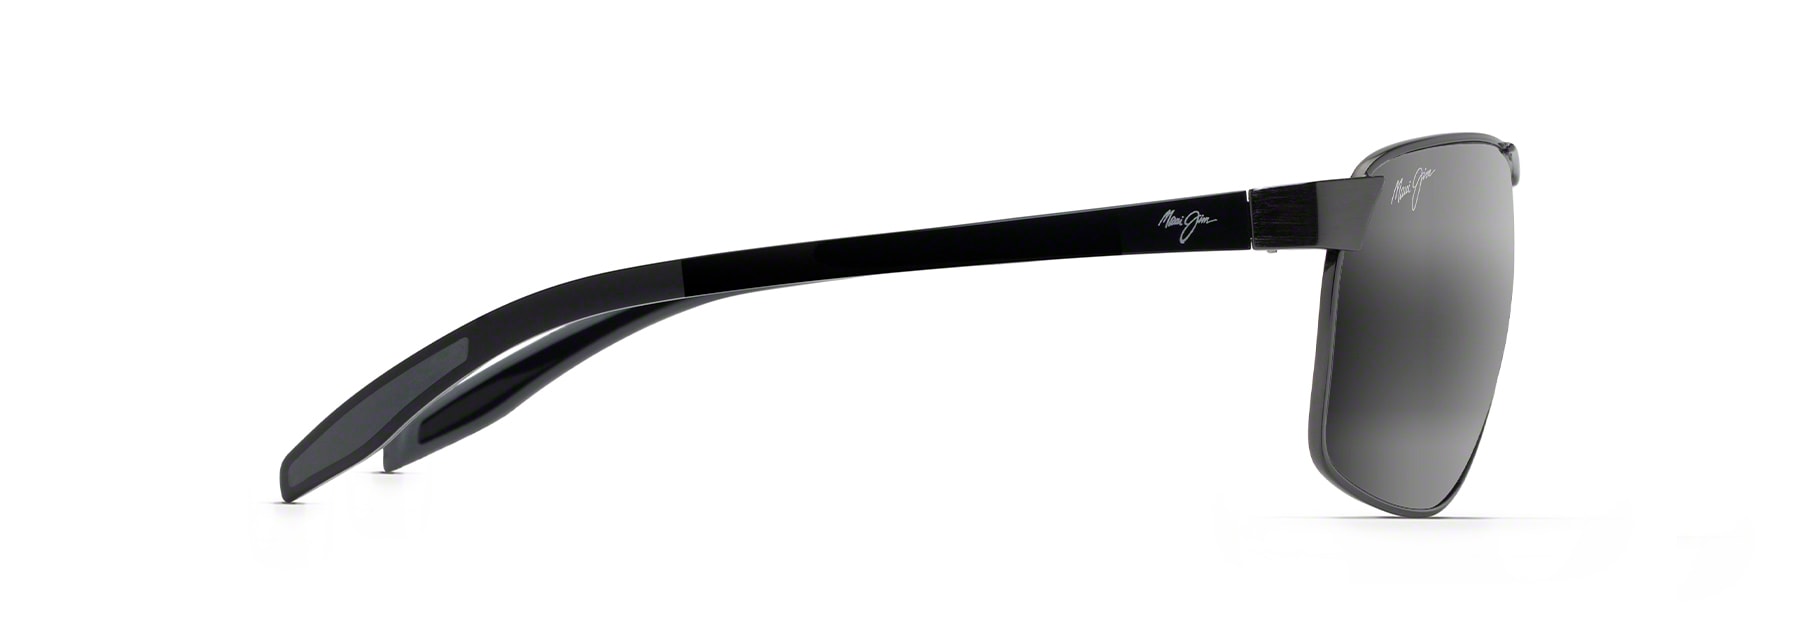 Maui Jim The Bird W/Patented Polarizedplus2 Lenses Rectangular Sunglasses 